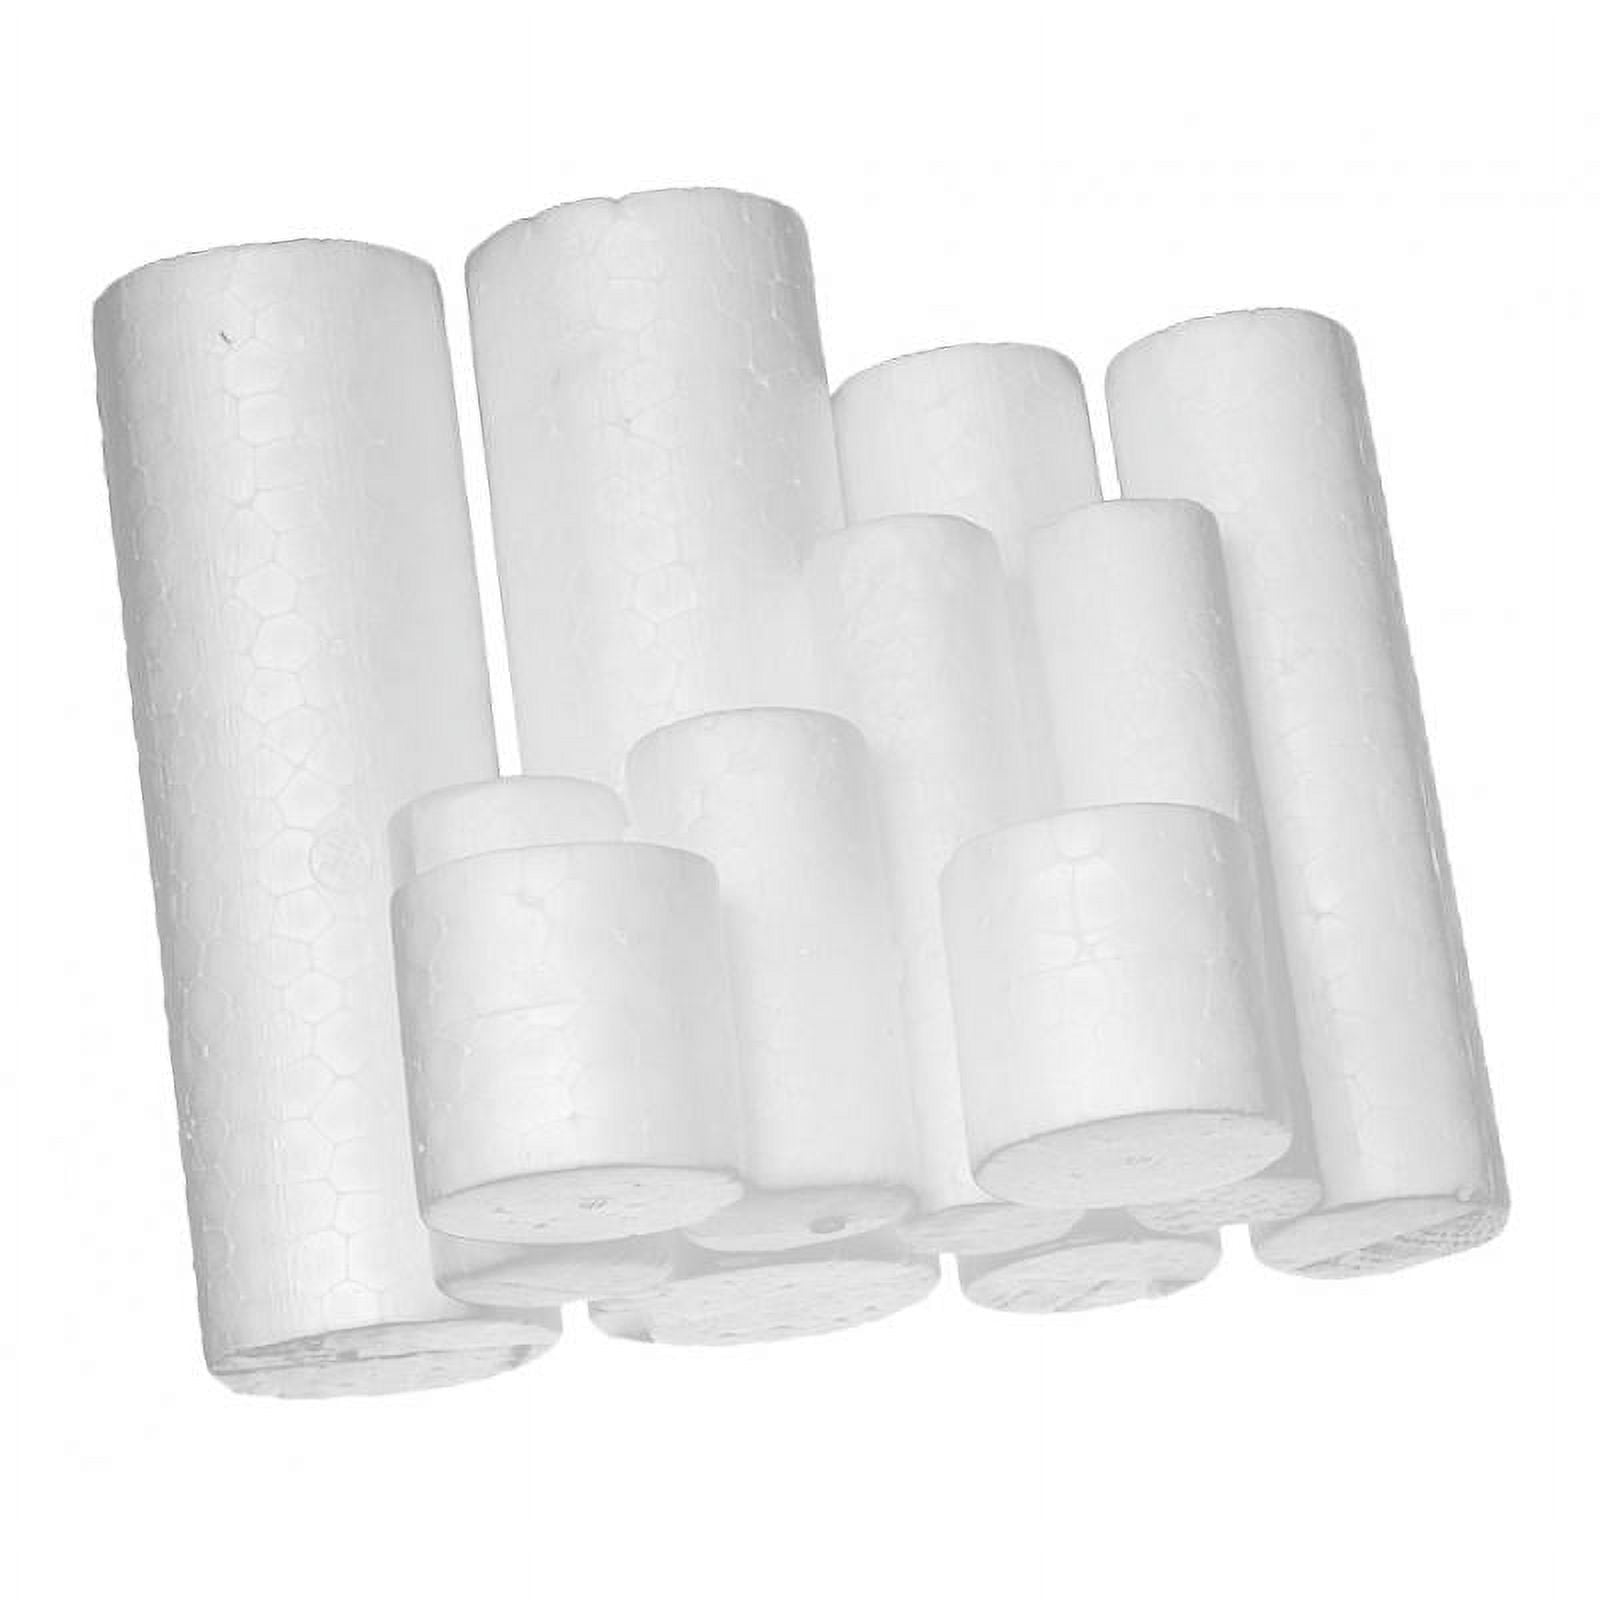  Foam Cylinders for Modeling, 12Pcs Cylinder Ball Polystyrene  Foam Brick Craft Foam Rods Cylinder Shape Polystyrene Blocks for DIY Crafts  Arts Projects Supplies 15cm